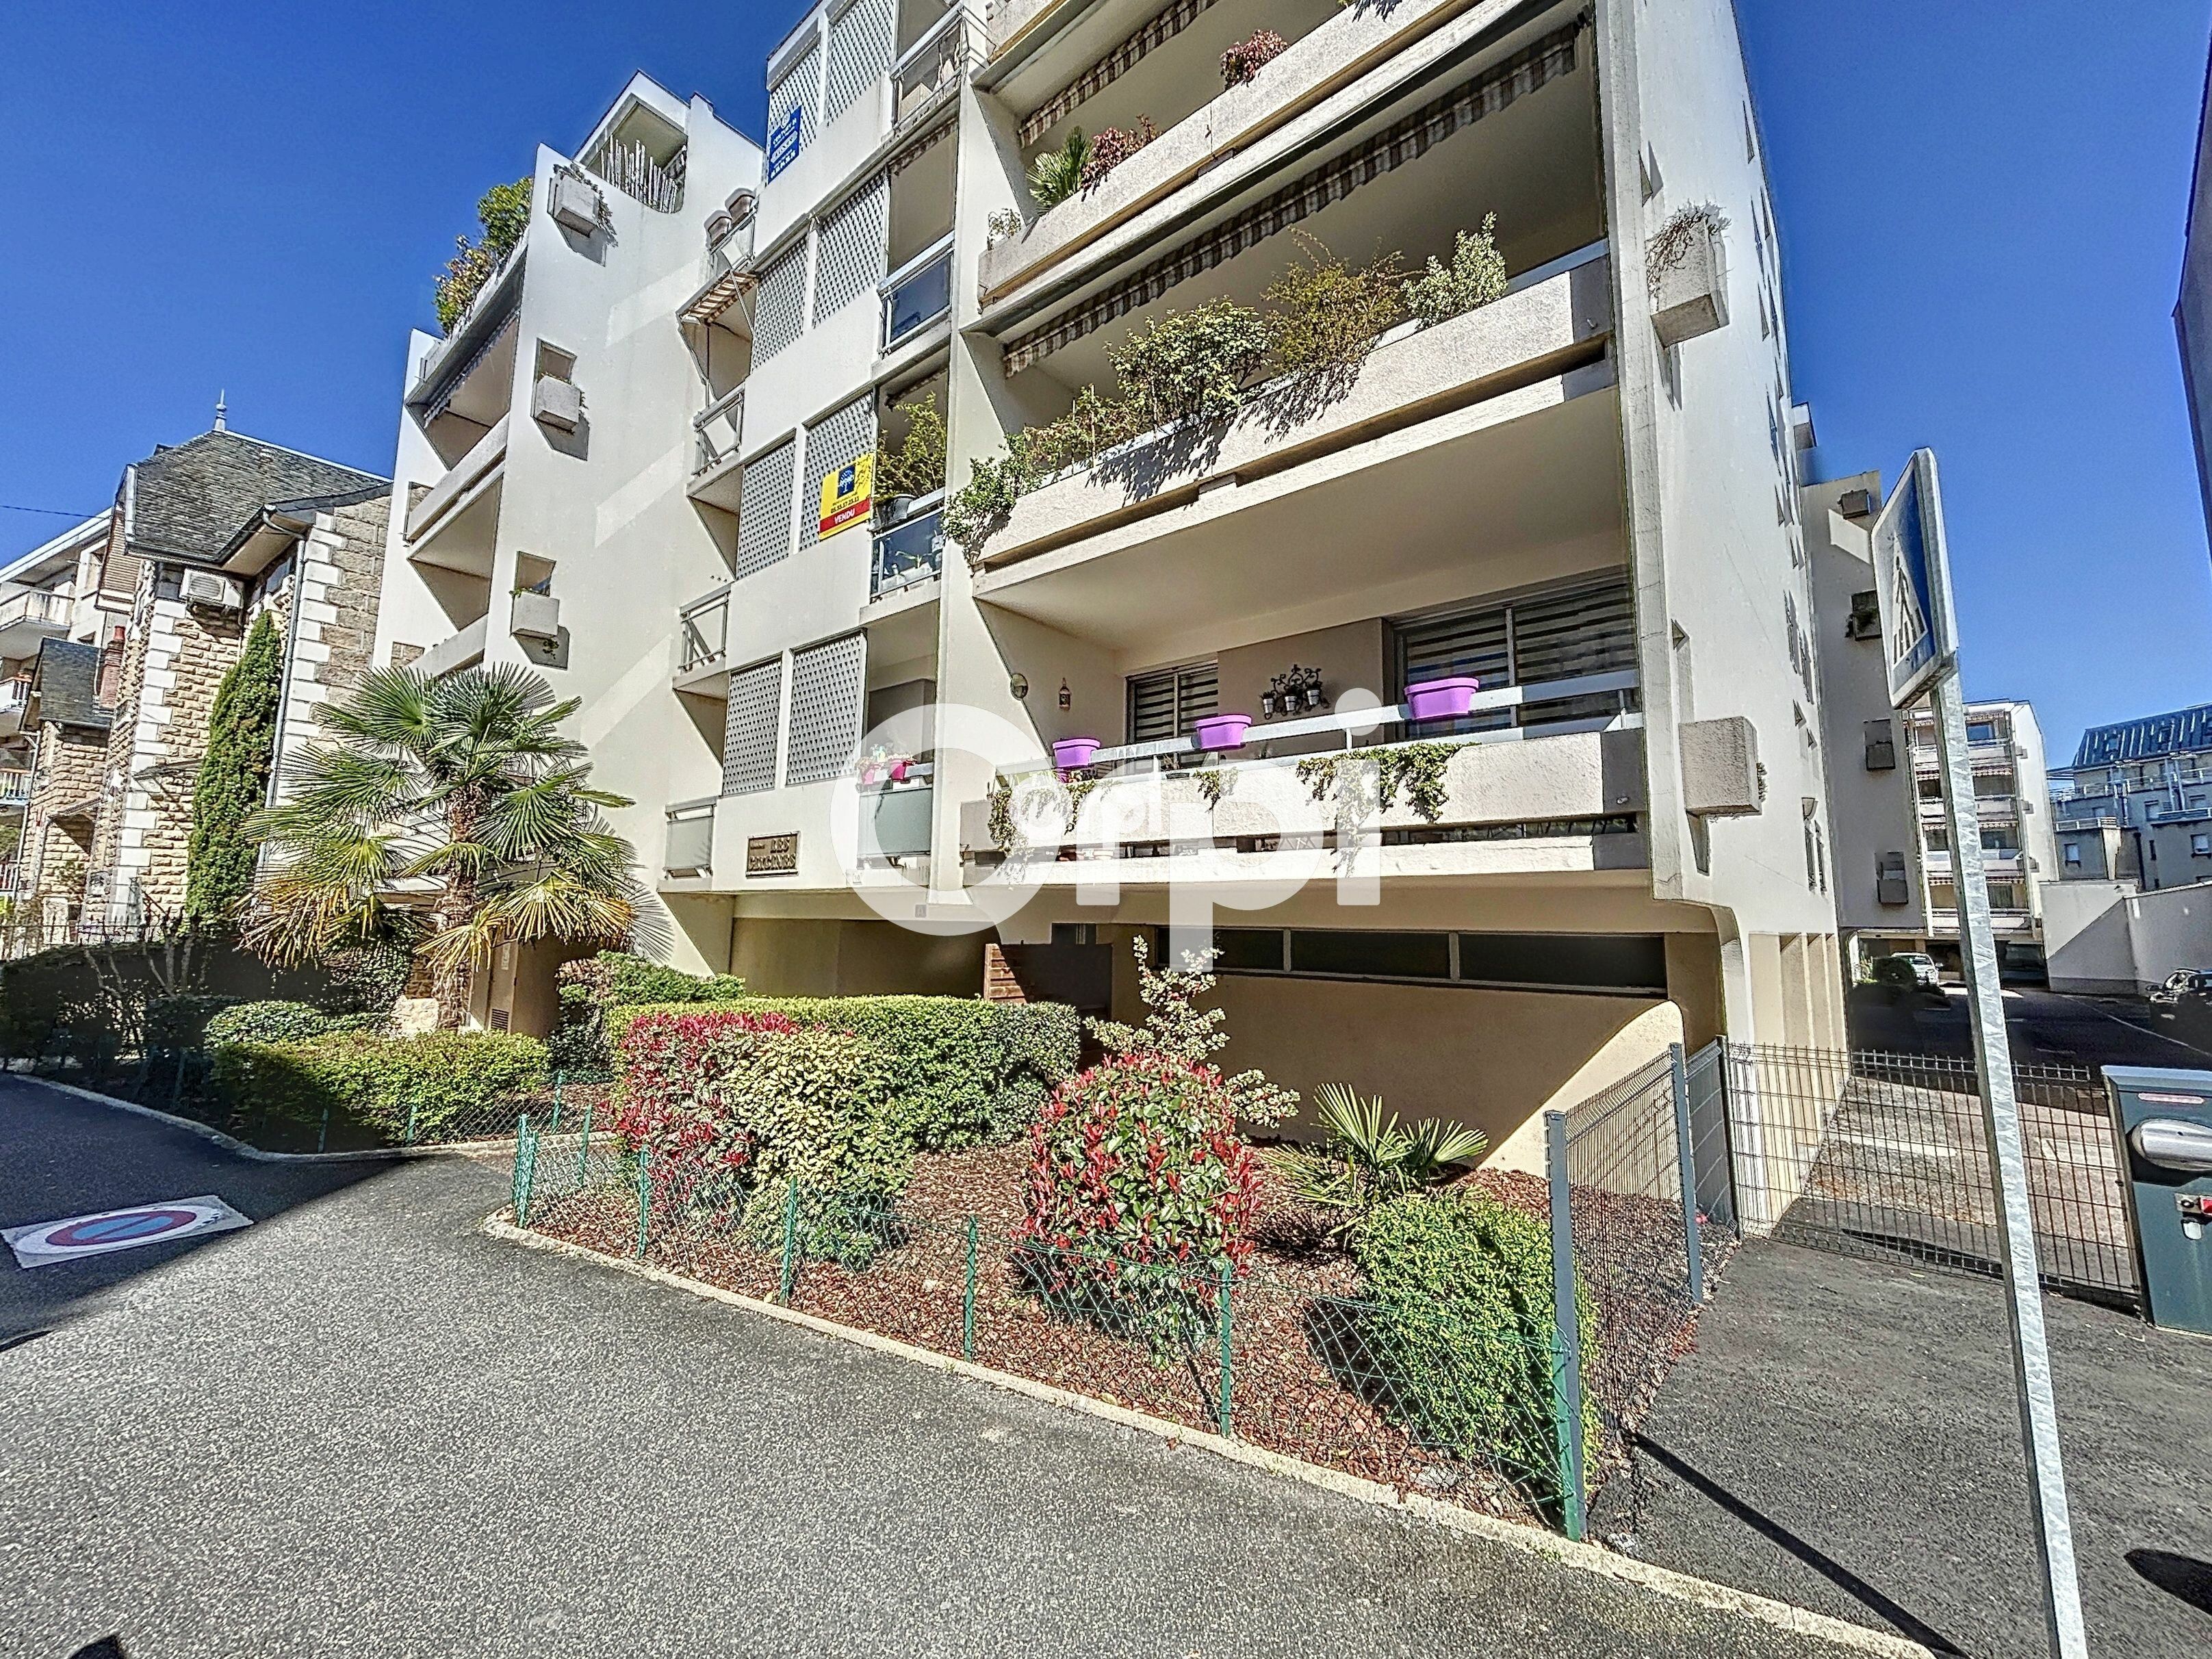 Appartement à vendre 4 98.72m2 à Brive-la-Gaillarde vignette-2